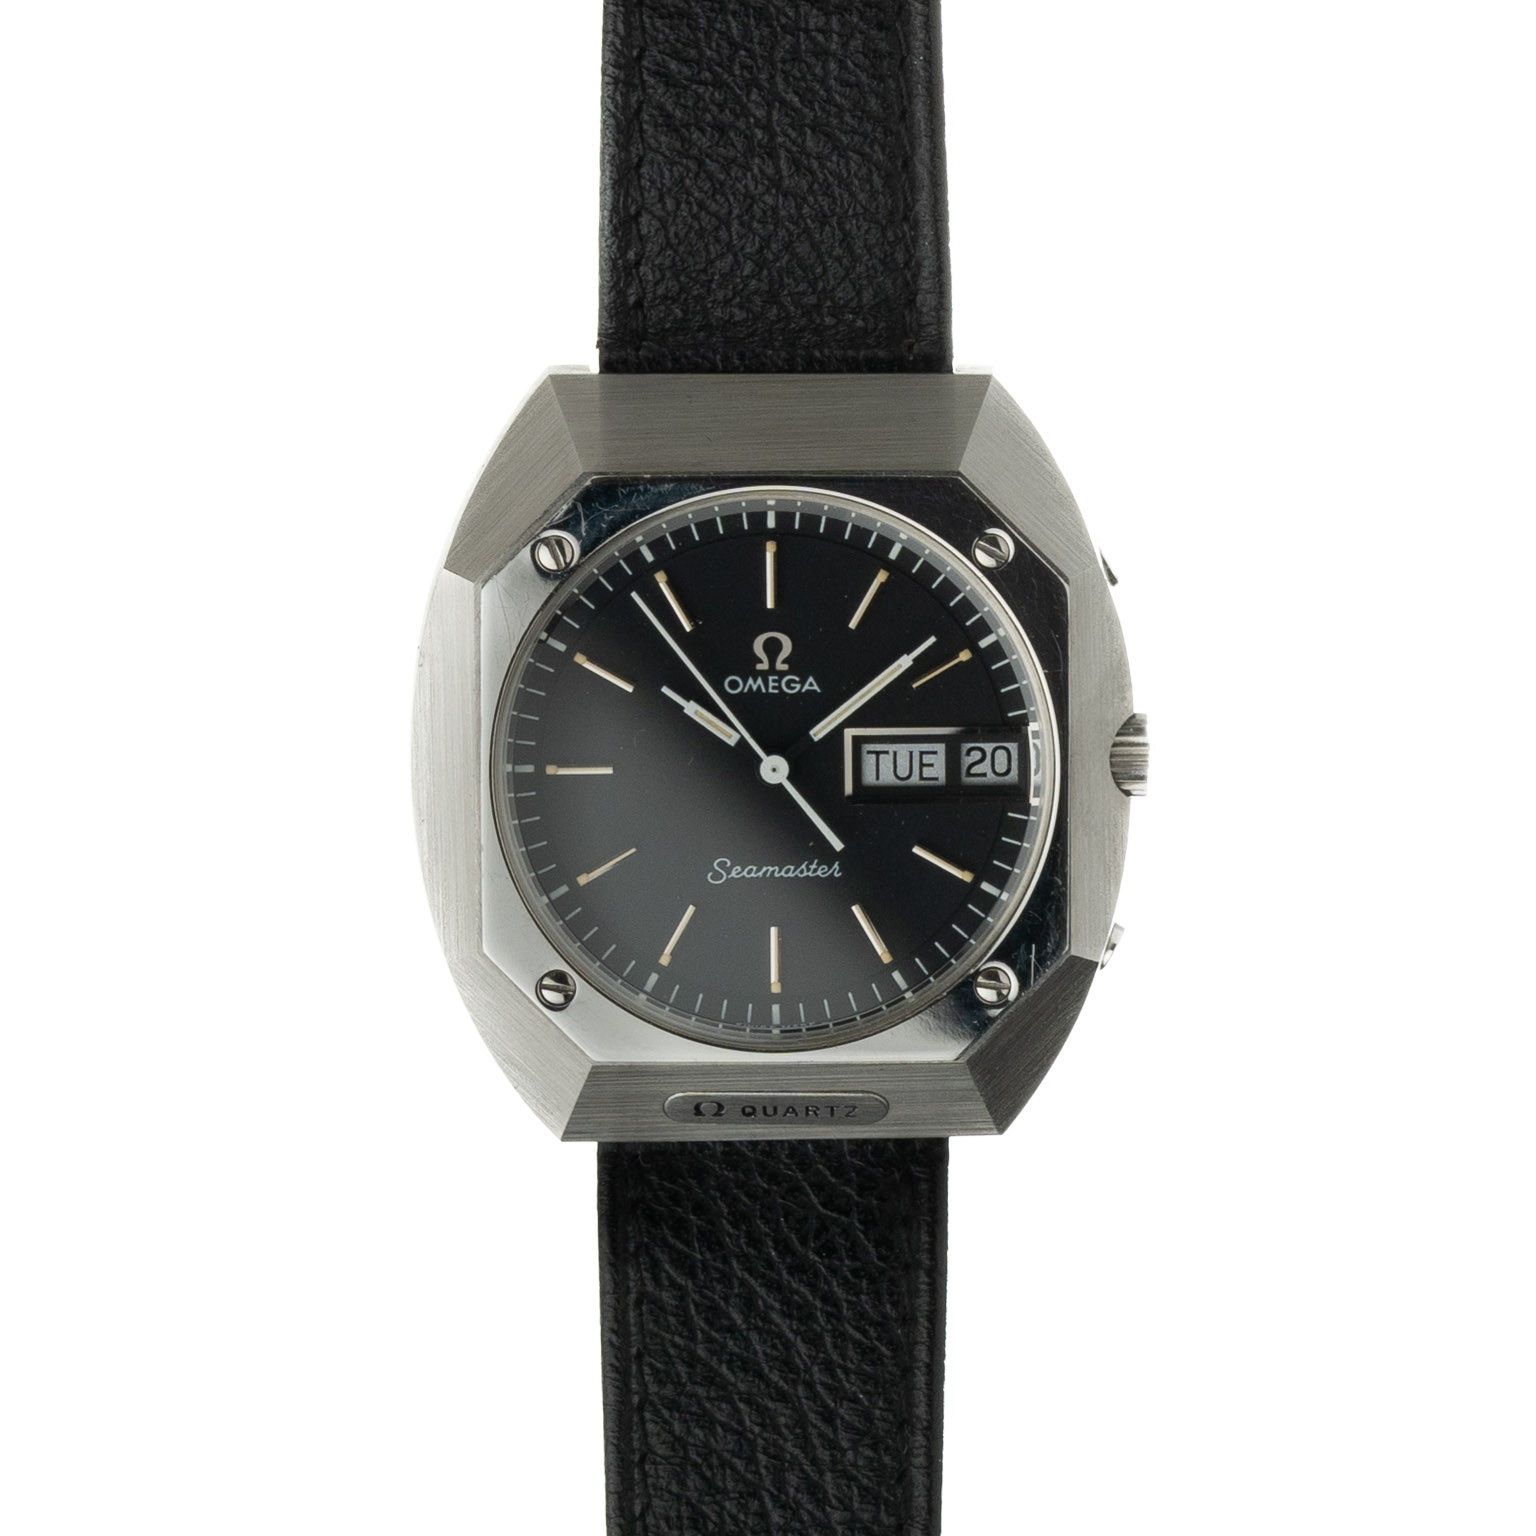 Omega Seamaster mariner 196.0054 quartz New Old Stock uit 1970 horloge